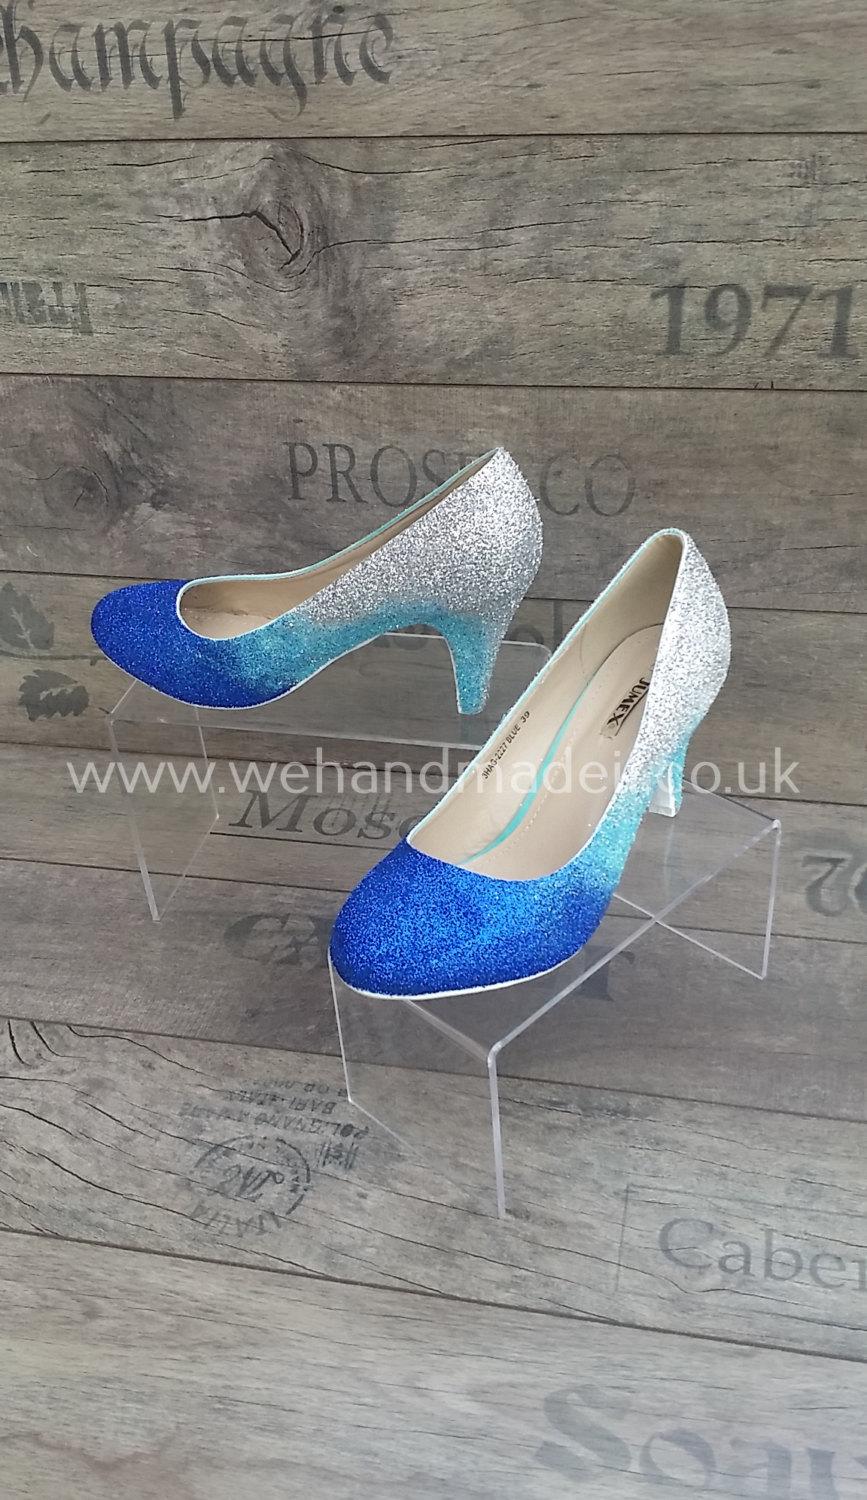 زفاف - Custom made blue to silver graded glitter shoes - any style or size.  Wedding shoes, prom shoes, custom glitter shoes made to order